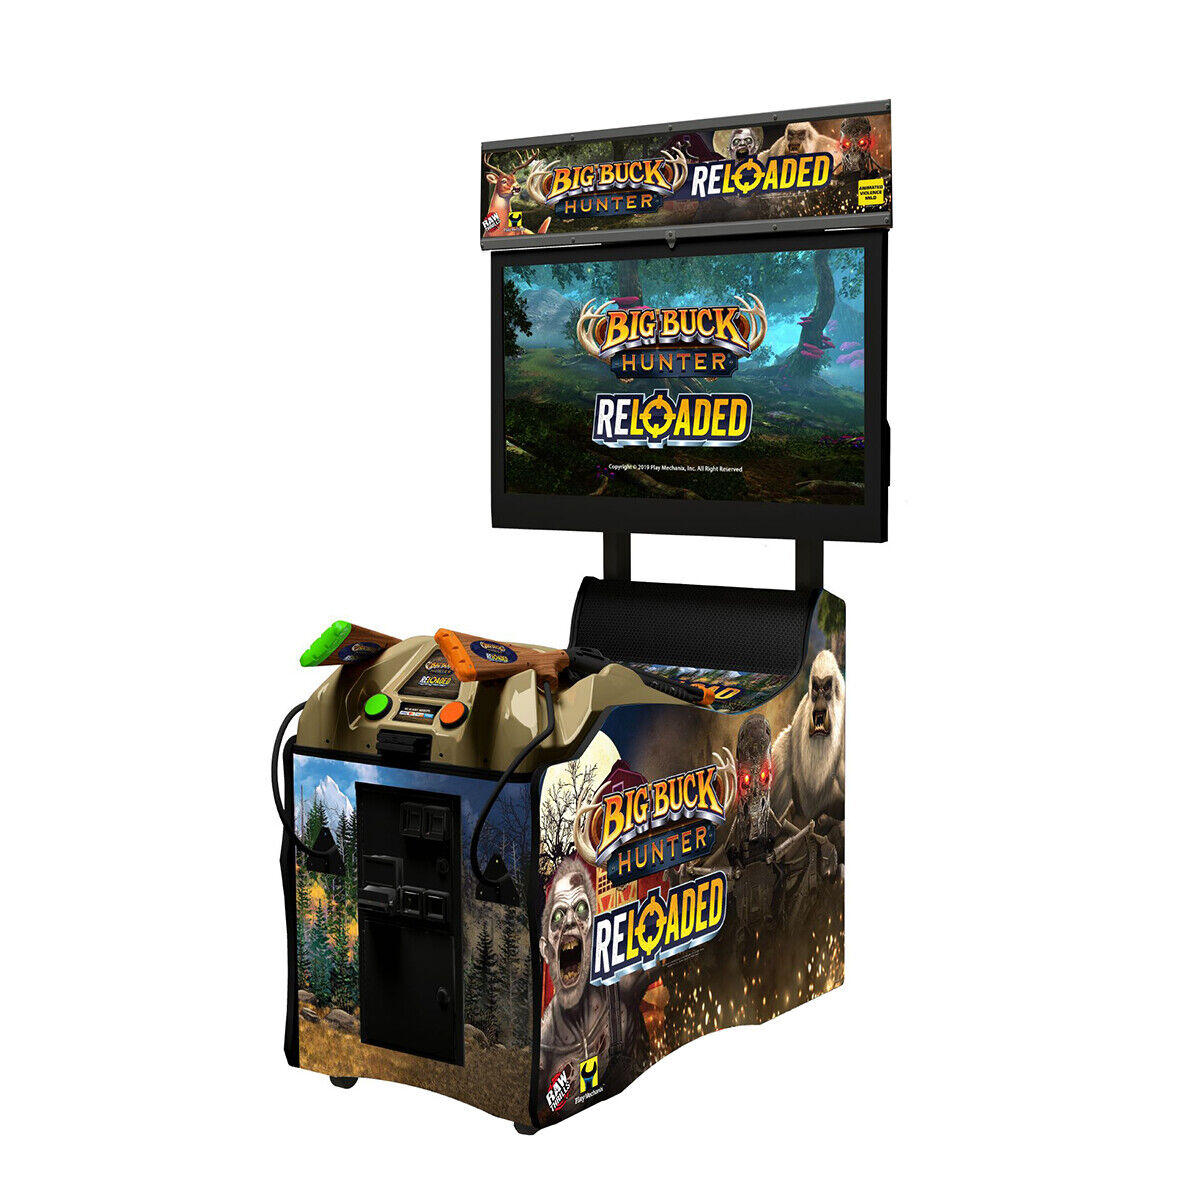 Big Buck Hunter Reloaded Panorama Gun Shooting Arcade Game Online